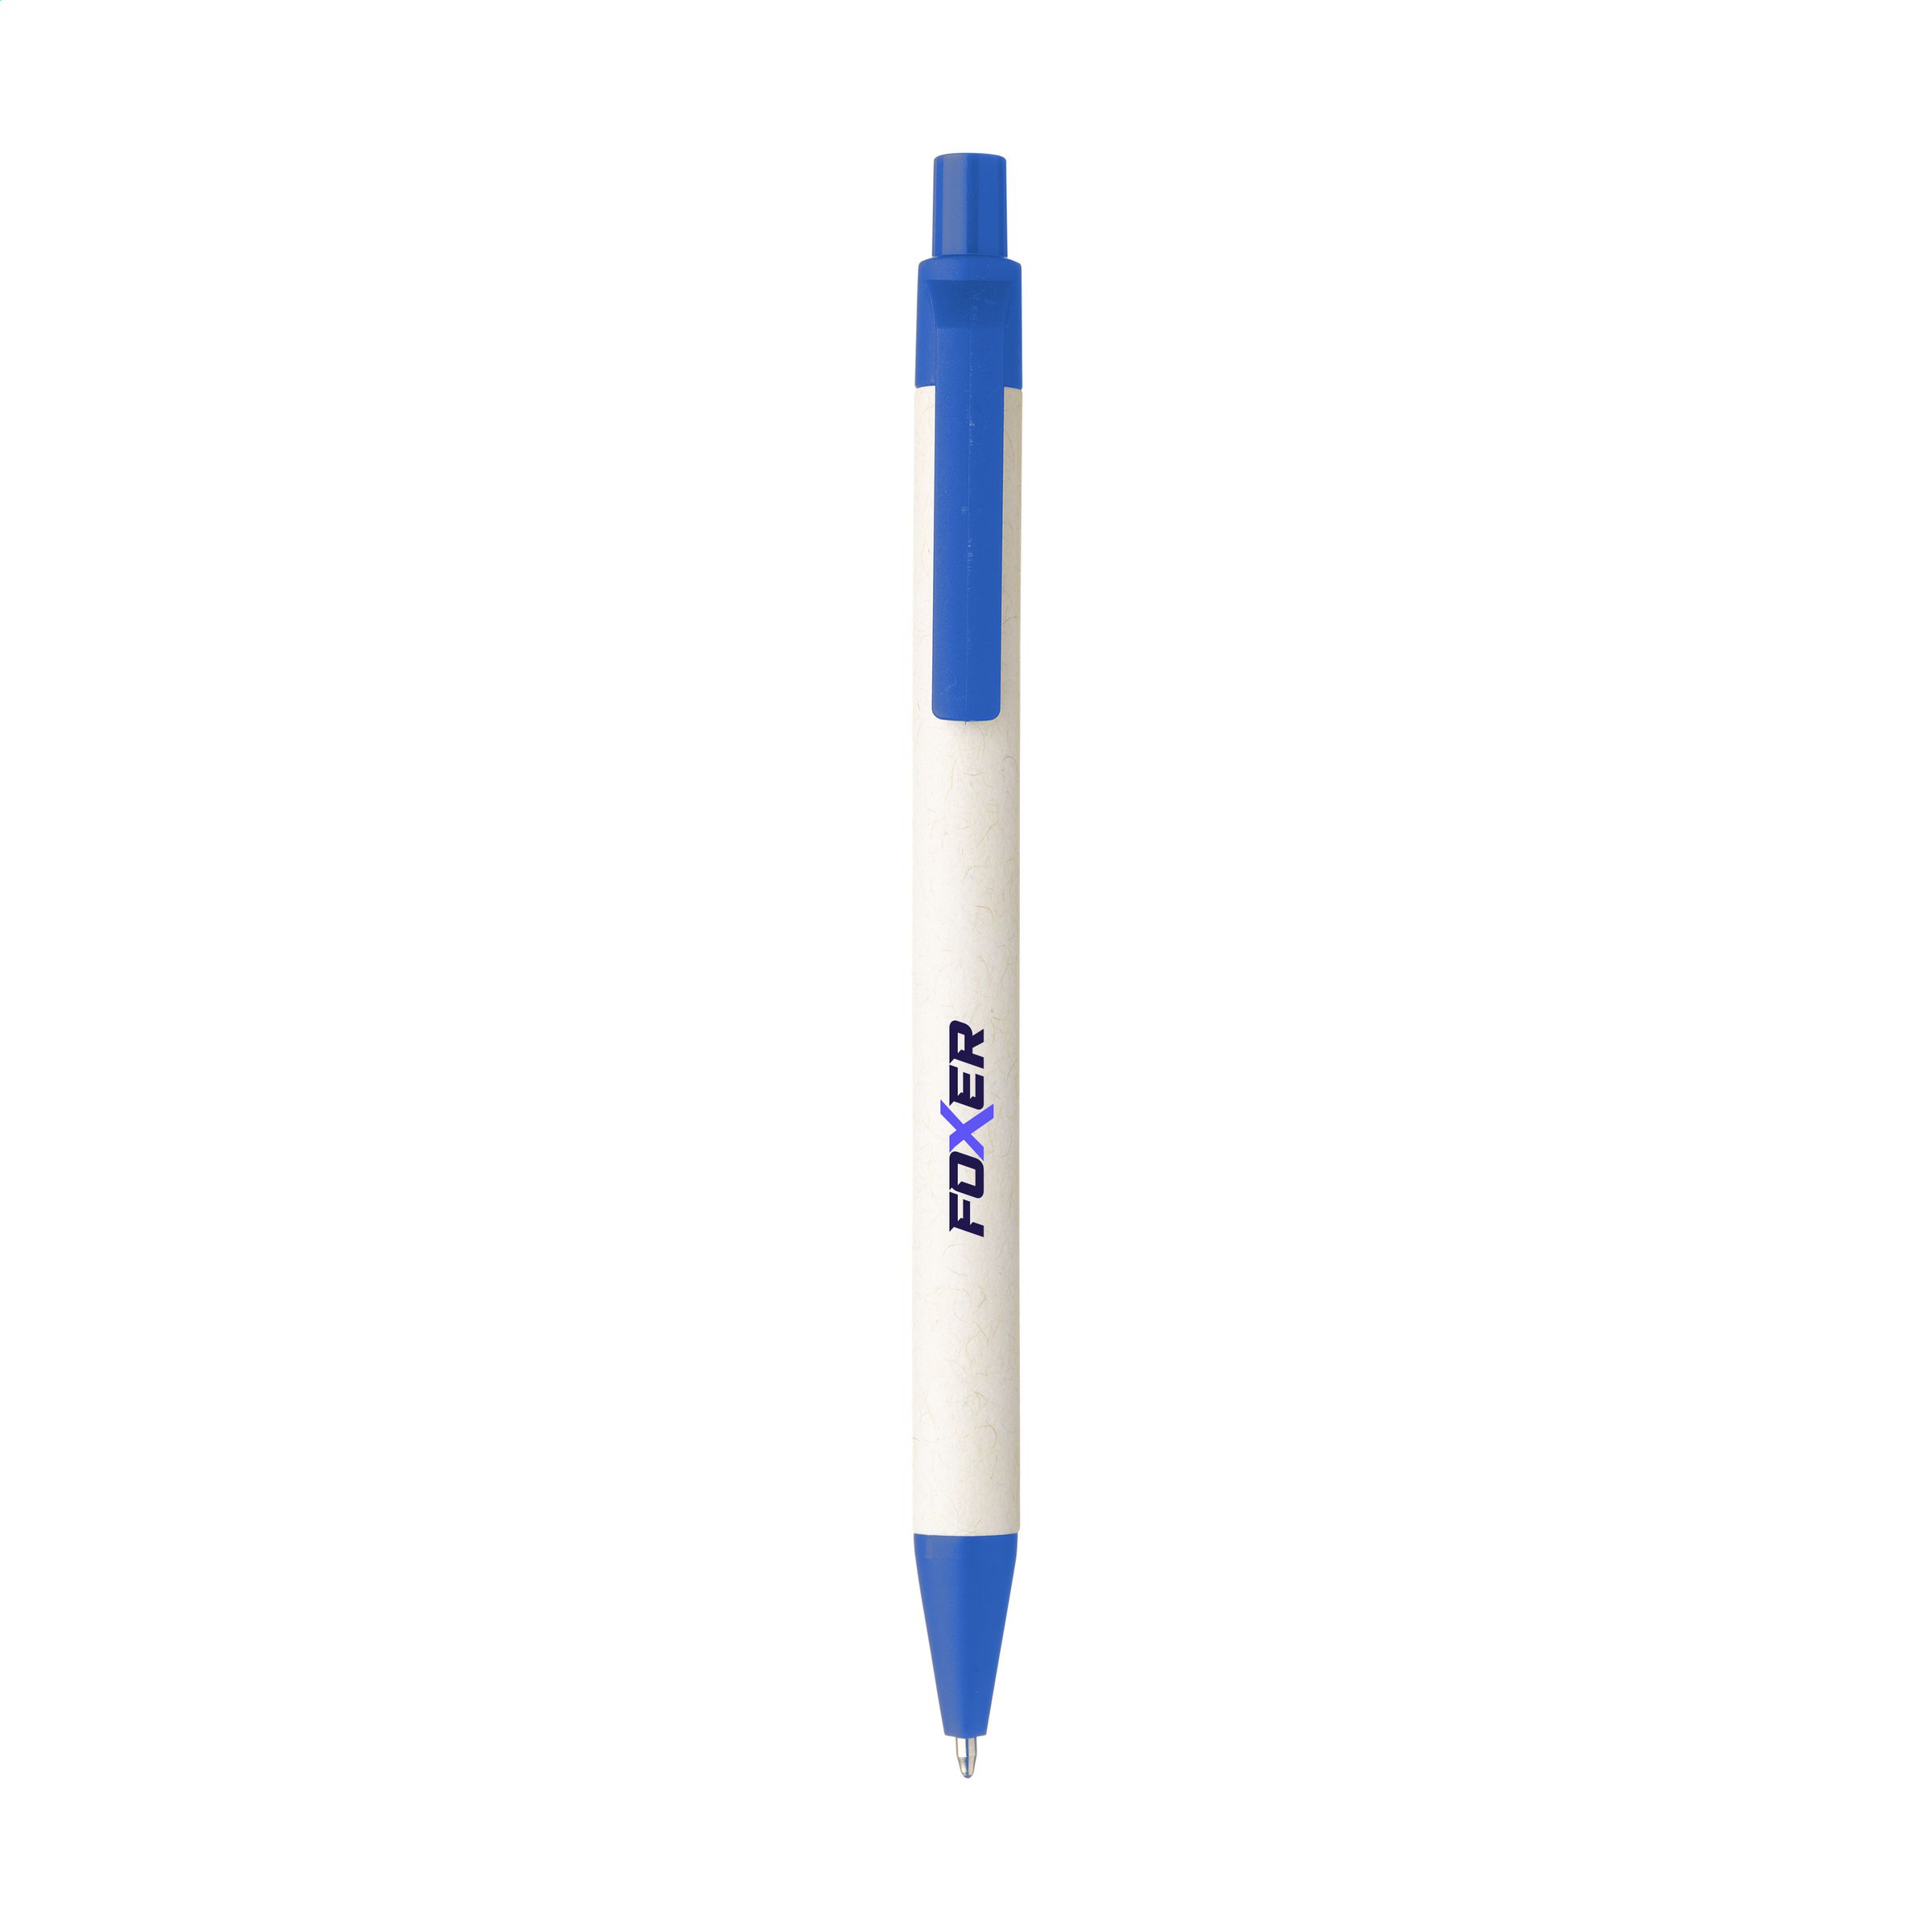 A pen in the shape of a milk carton - Hamworthy